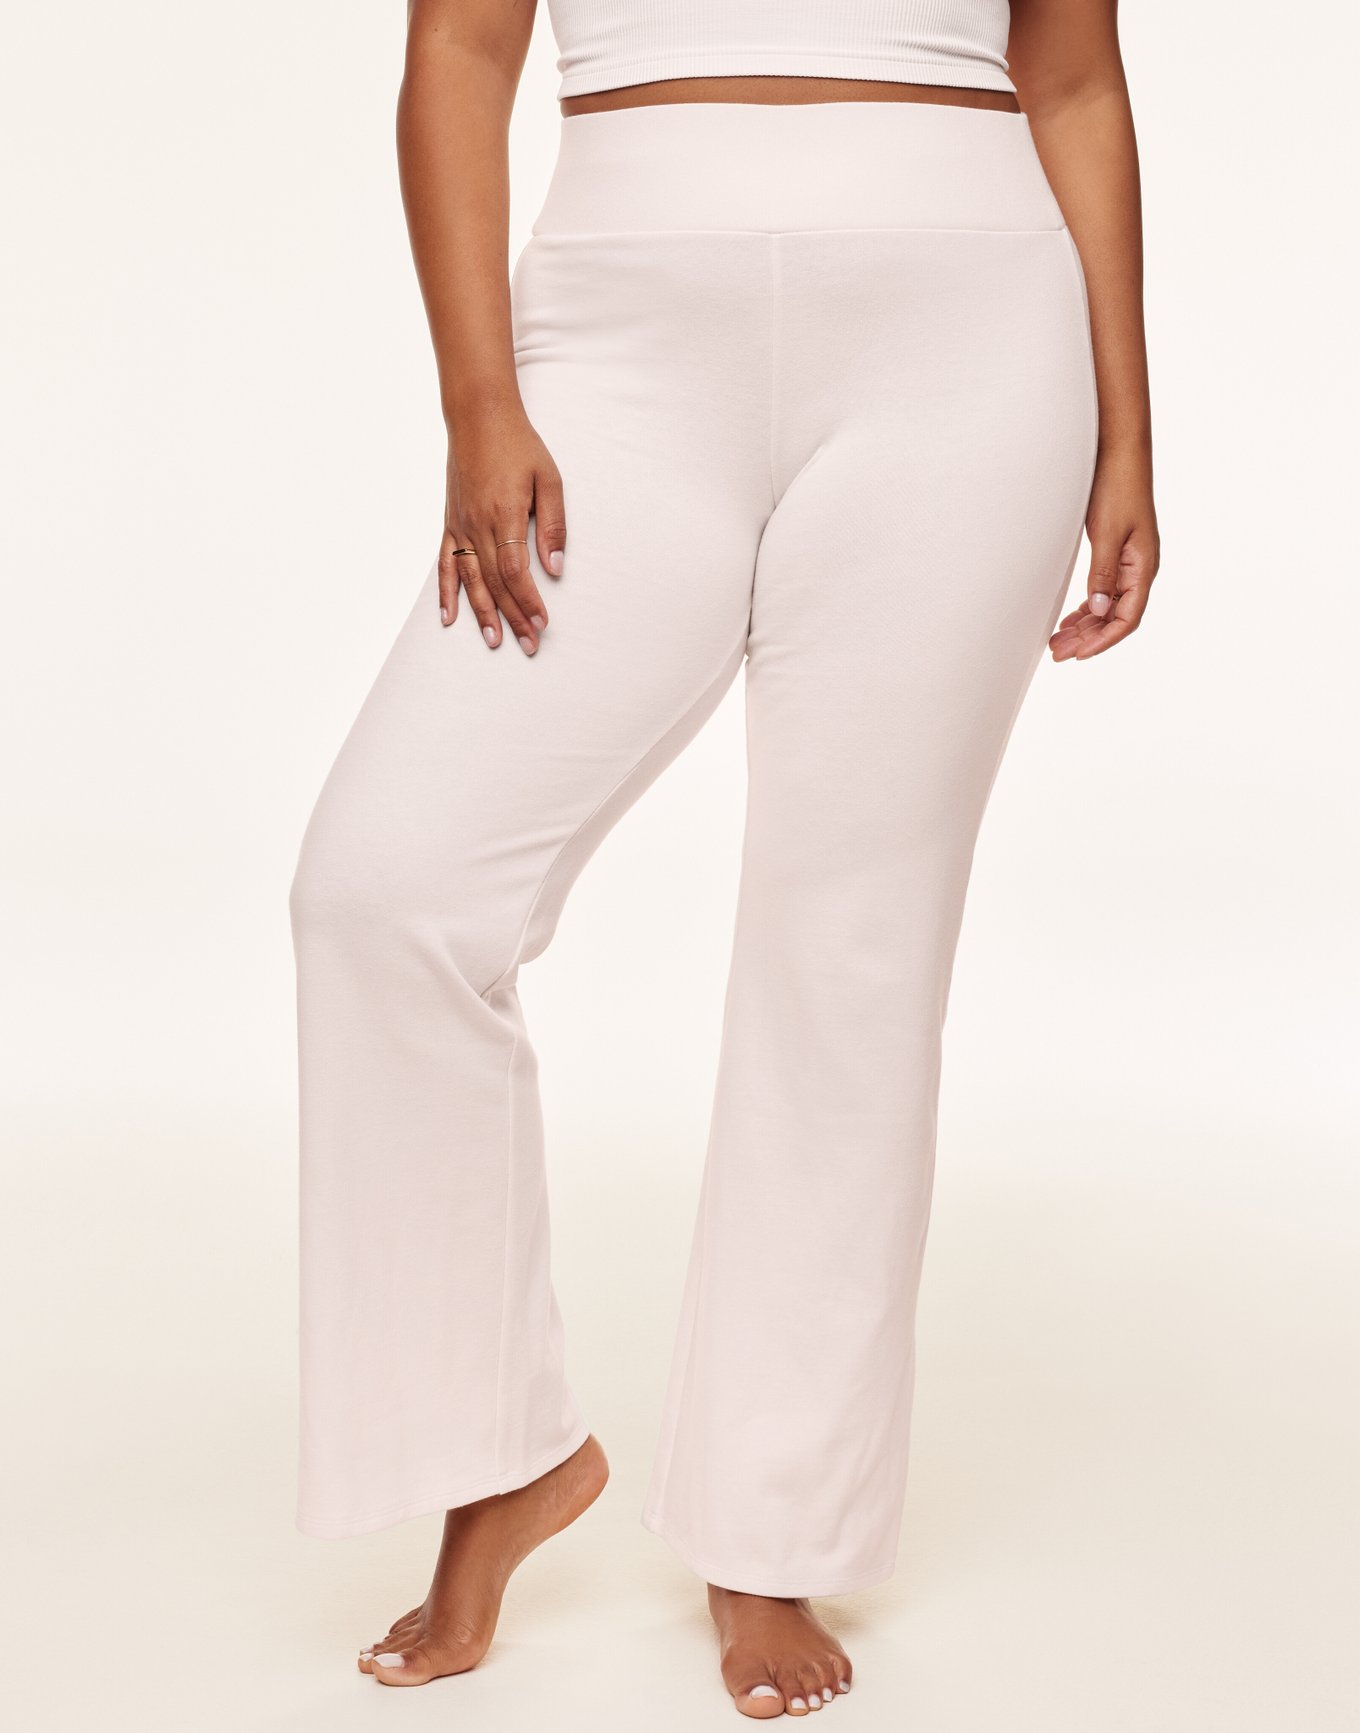 Plus Size White Trousers | Karen Millen UK